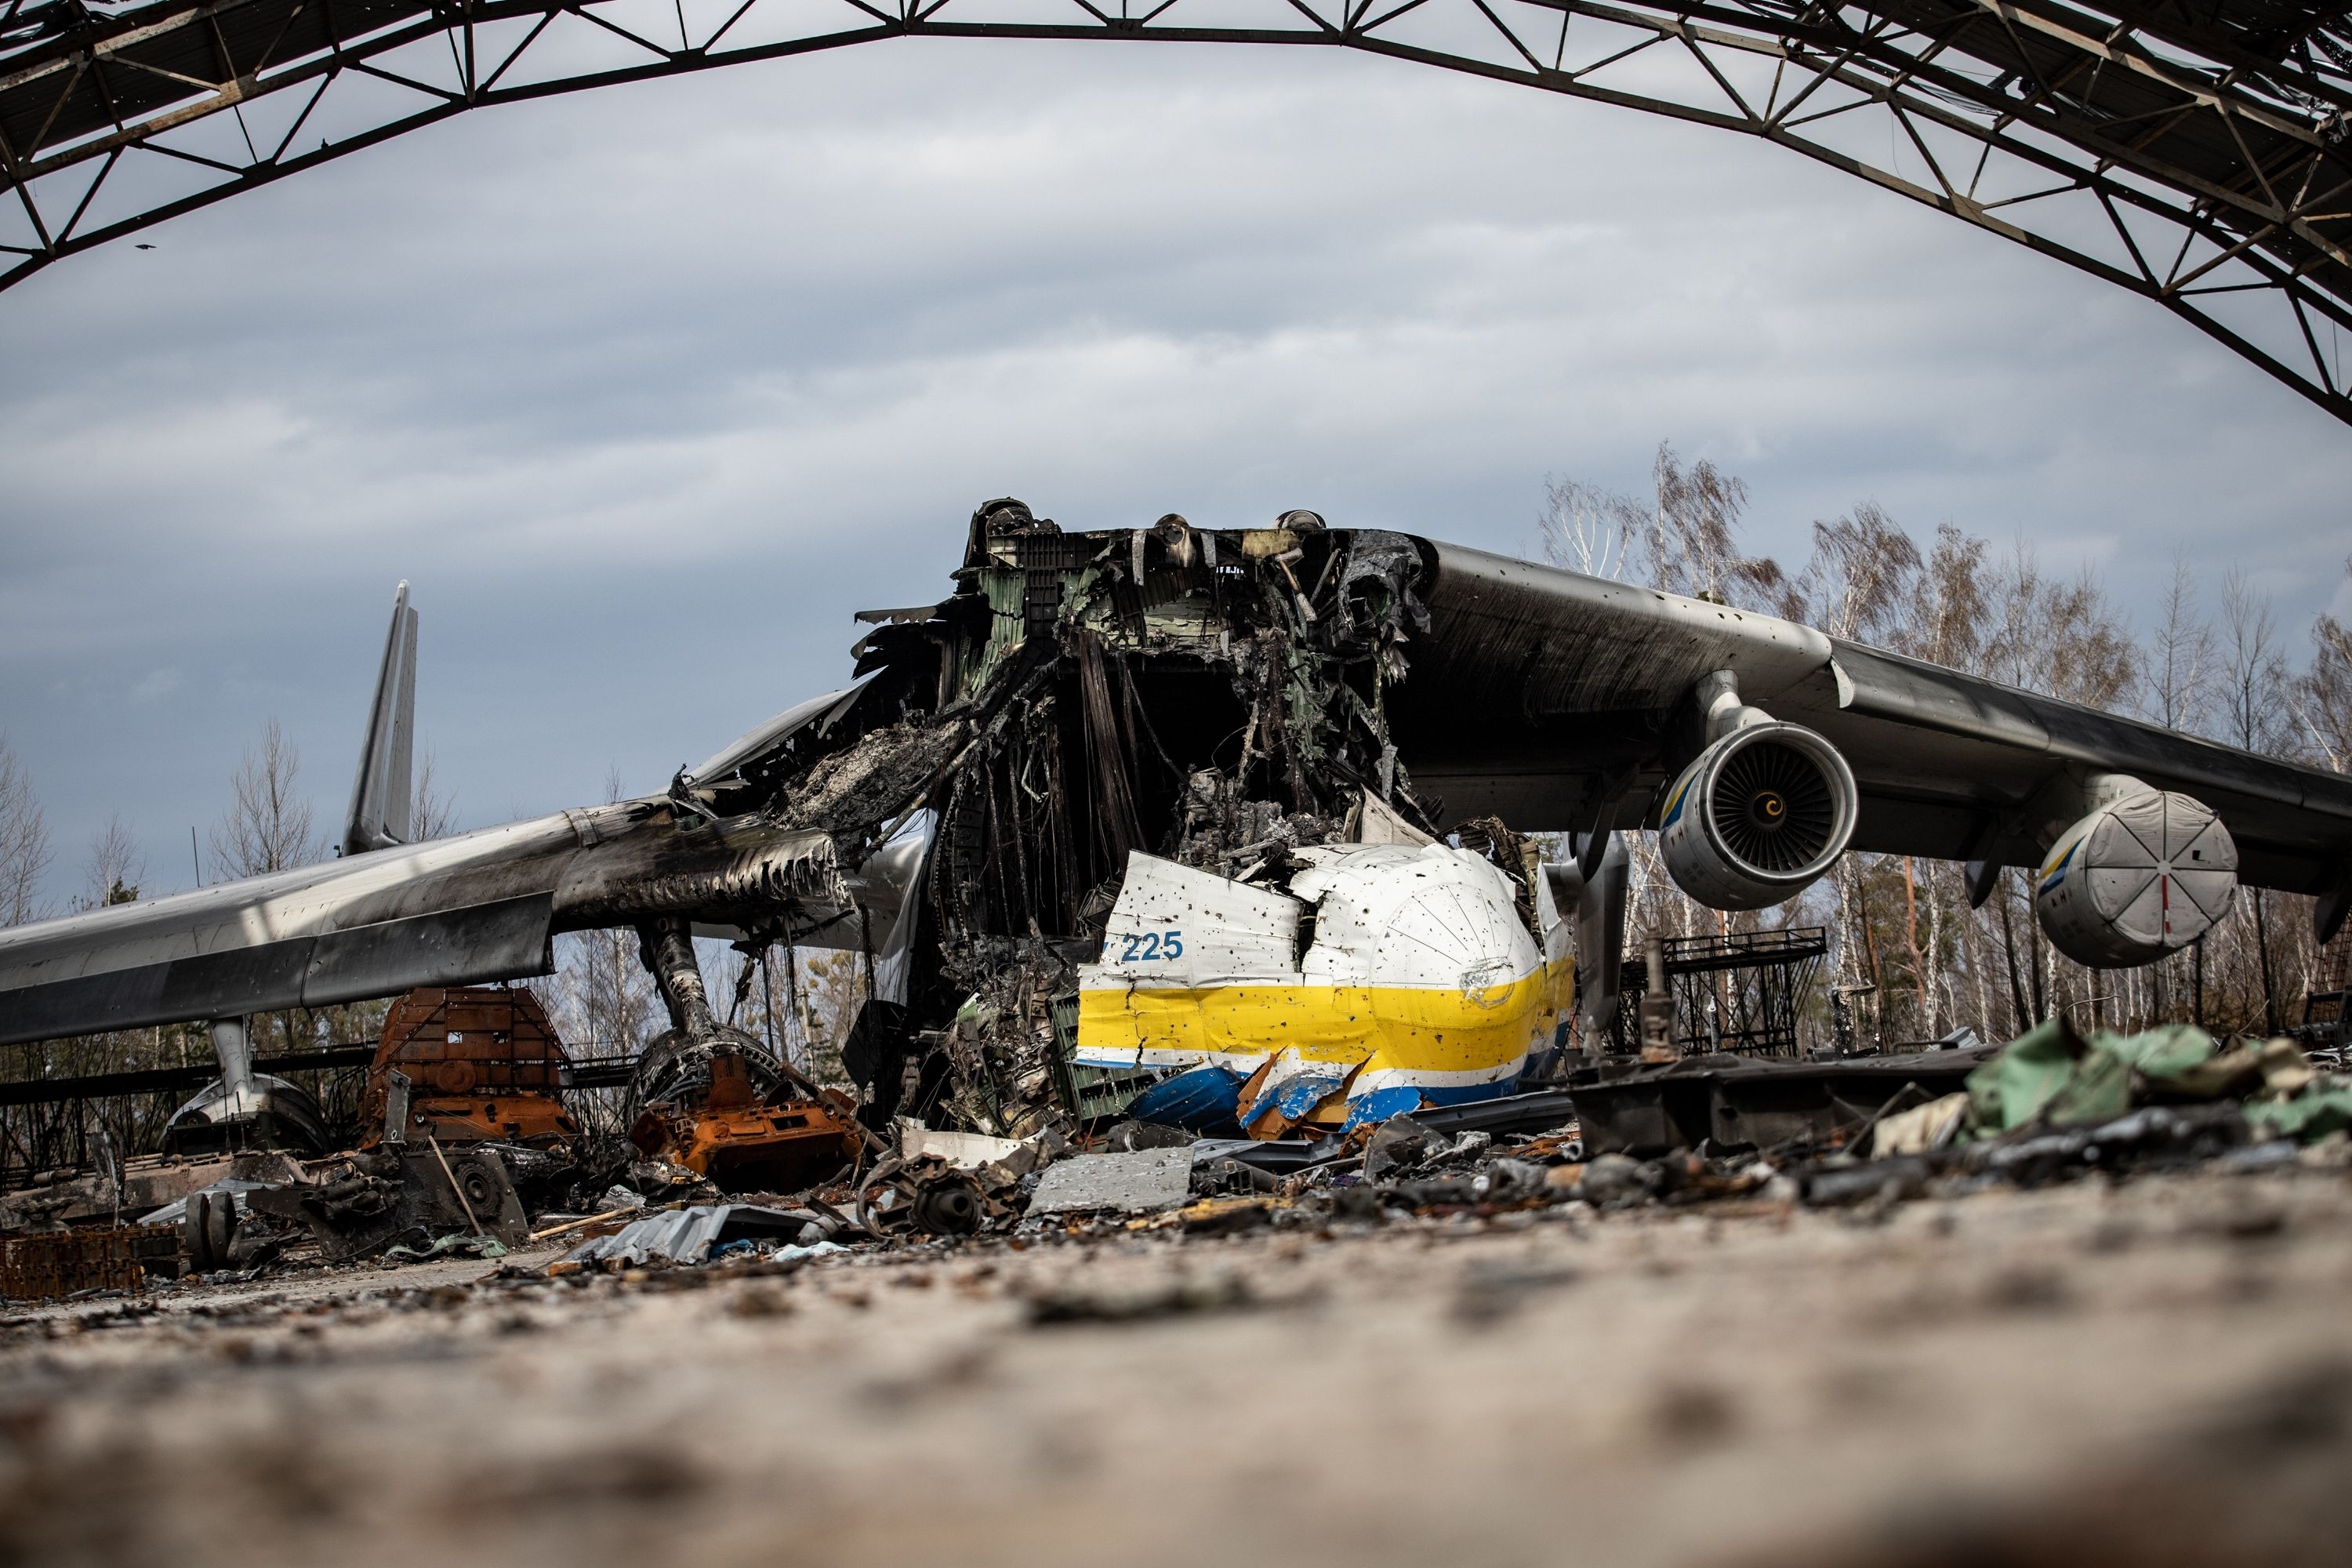 The Antonov AN-225 Mriya destroyed